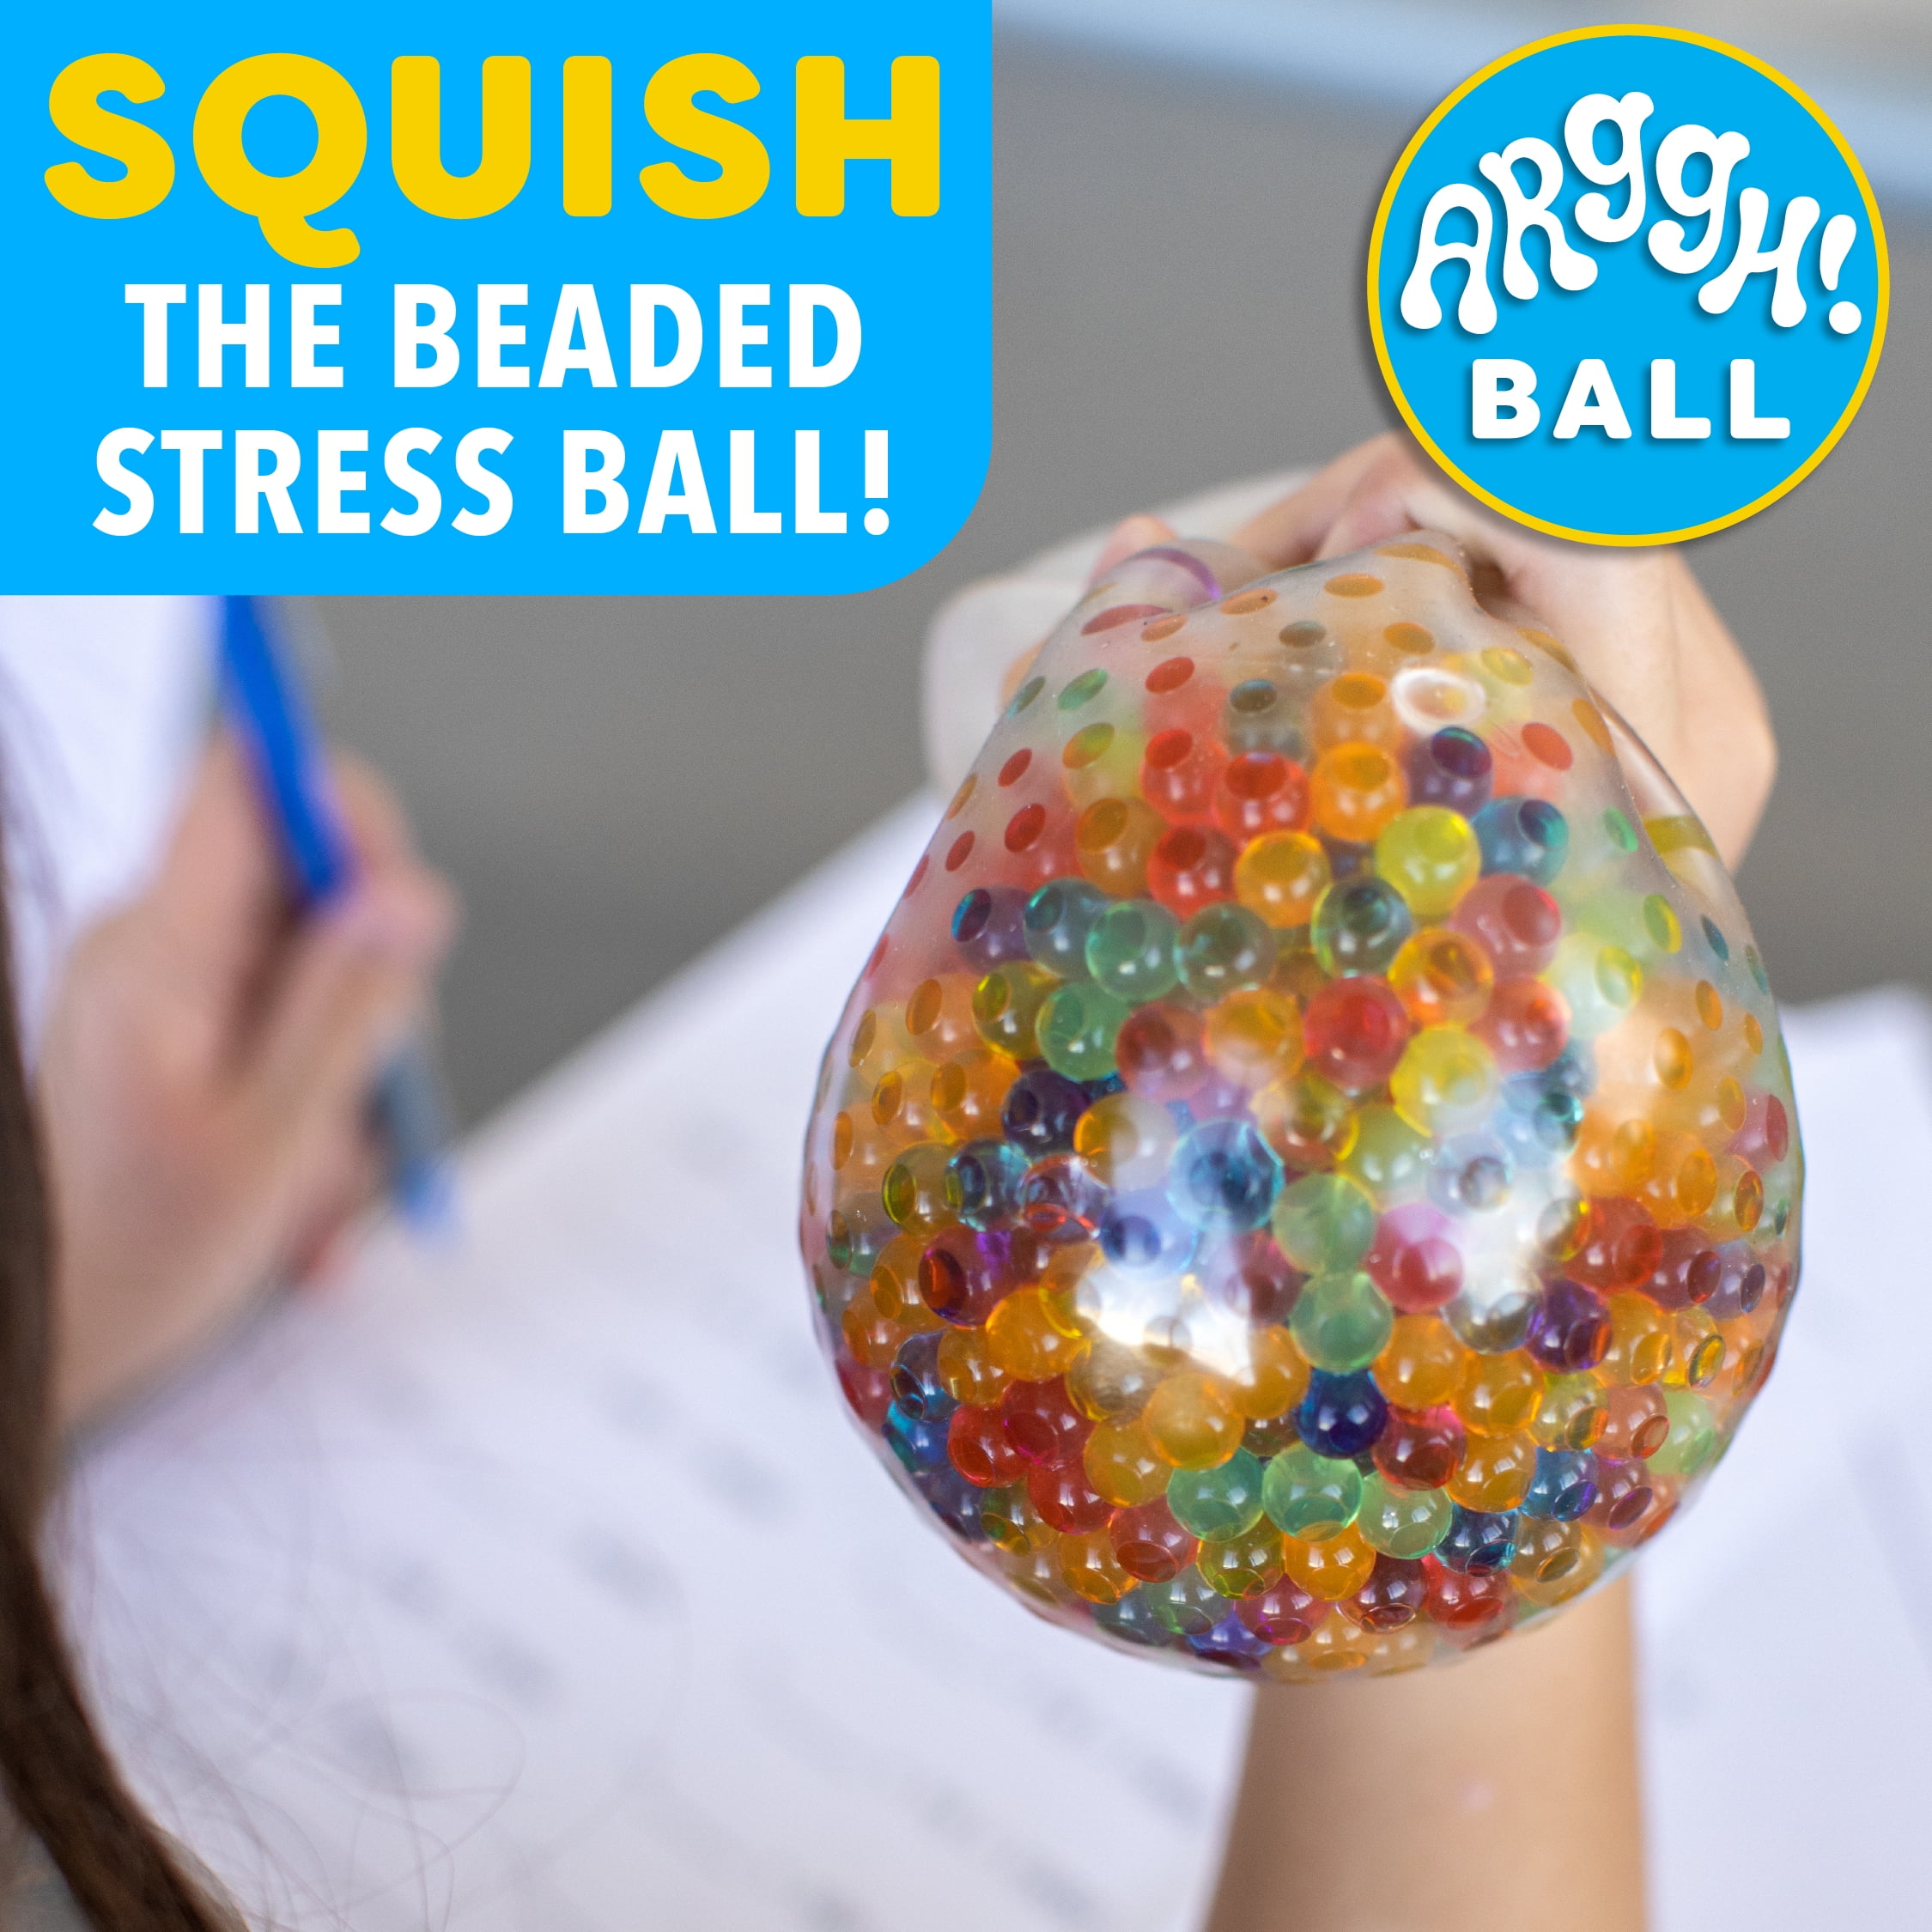 Beadeez Squishy Stress Balls With Beads